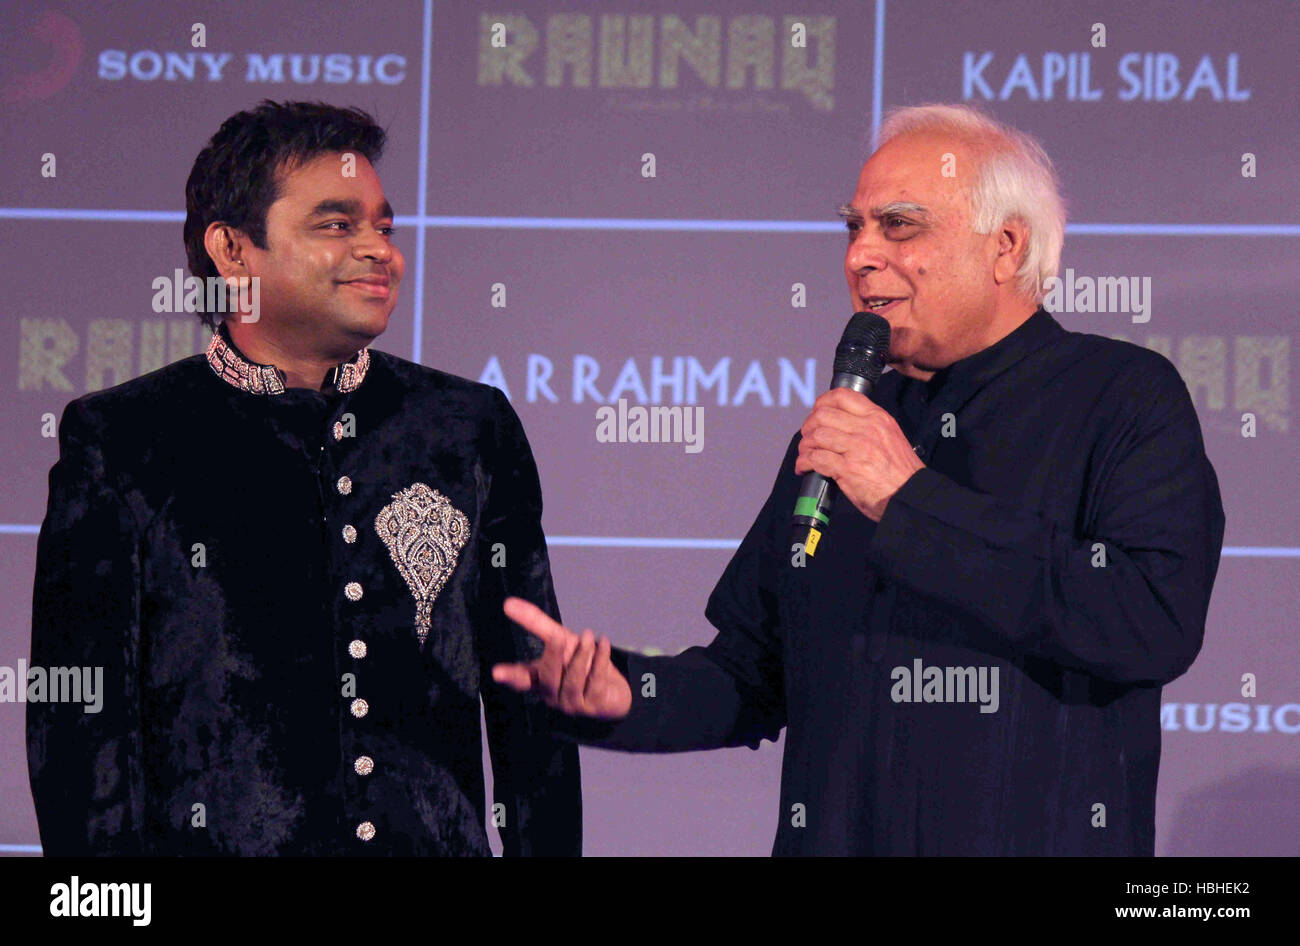 Bollywood A R Rahman Kapil Sibal durante il lancio del loro album di musica Raunaq in Mumbai Foto Stock